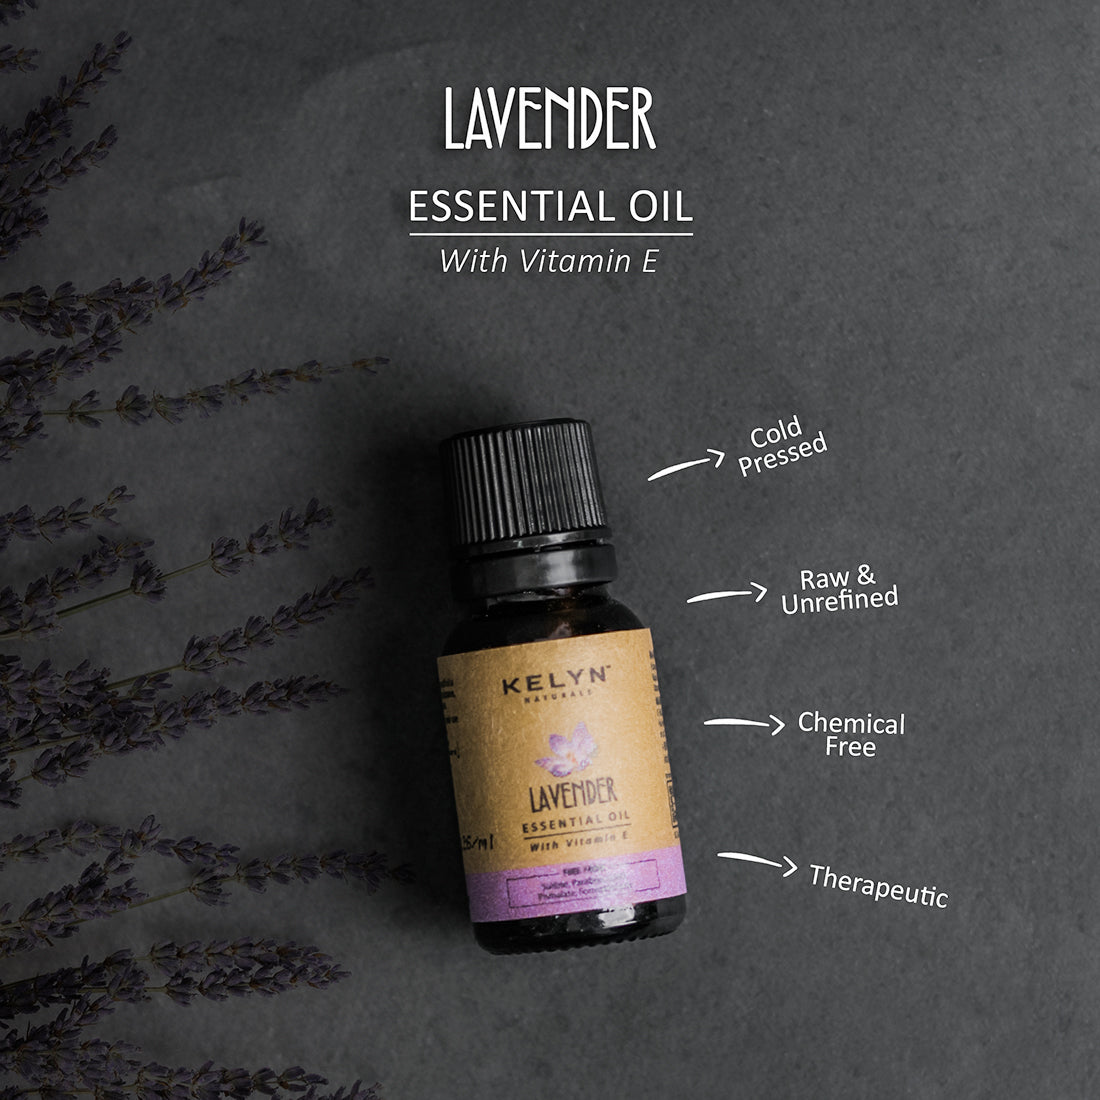 Kelyn Lavender Essential Oil with Vitamin E - 15ml